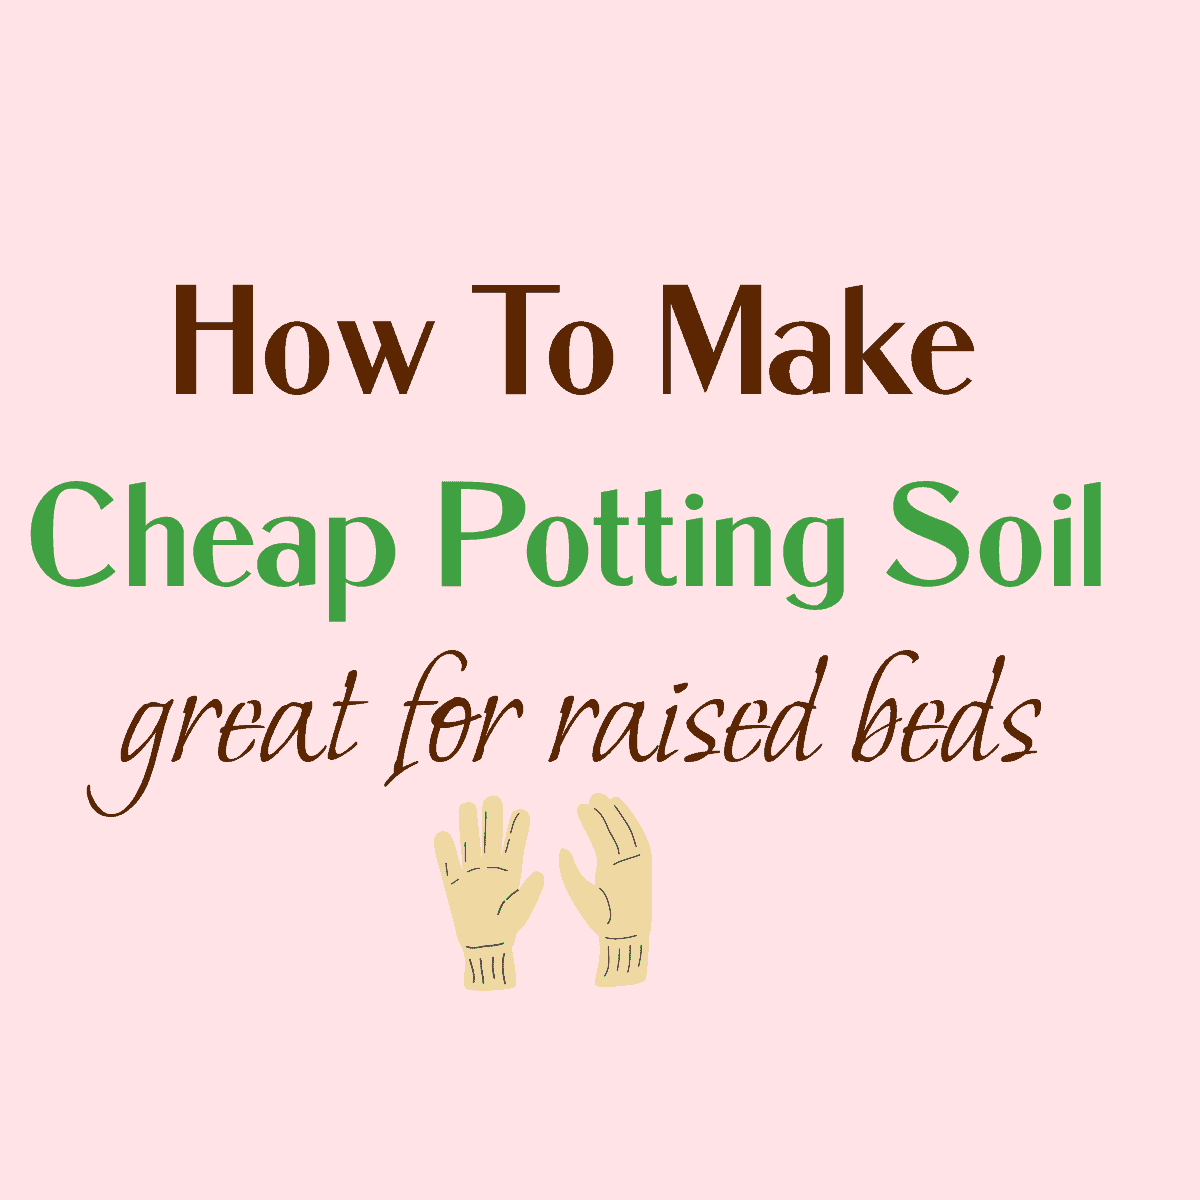 diy potting soil image.